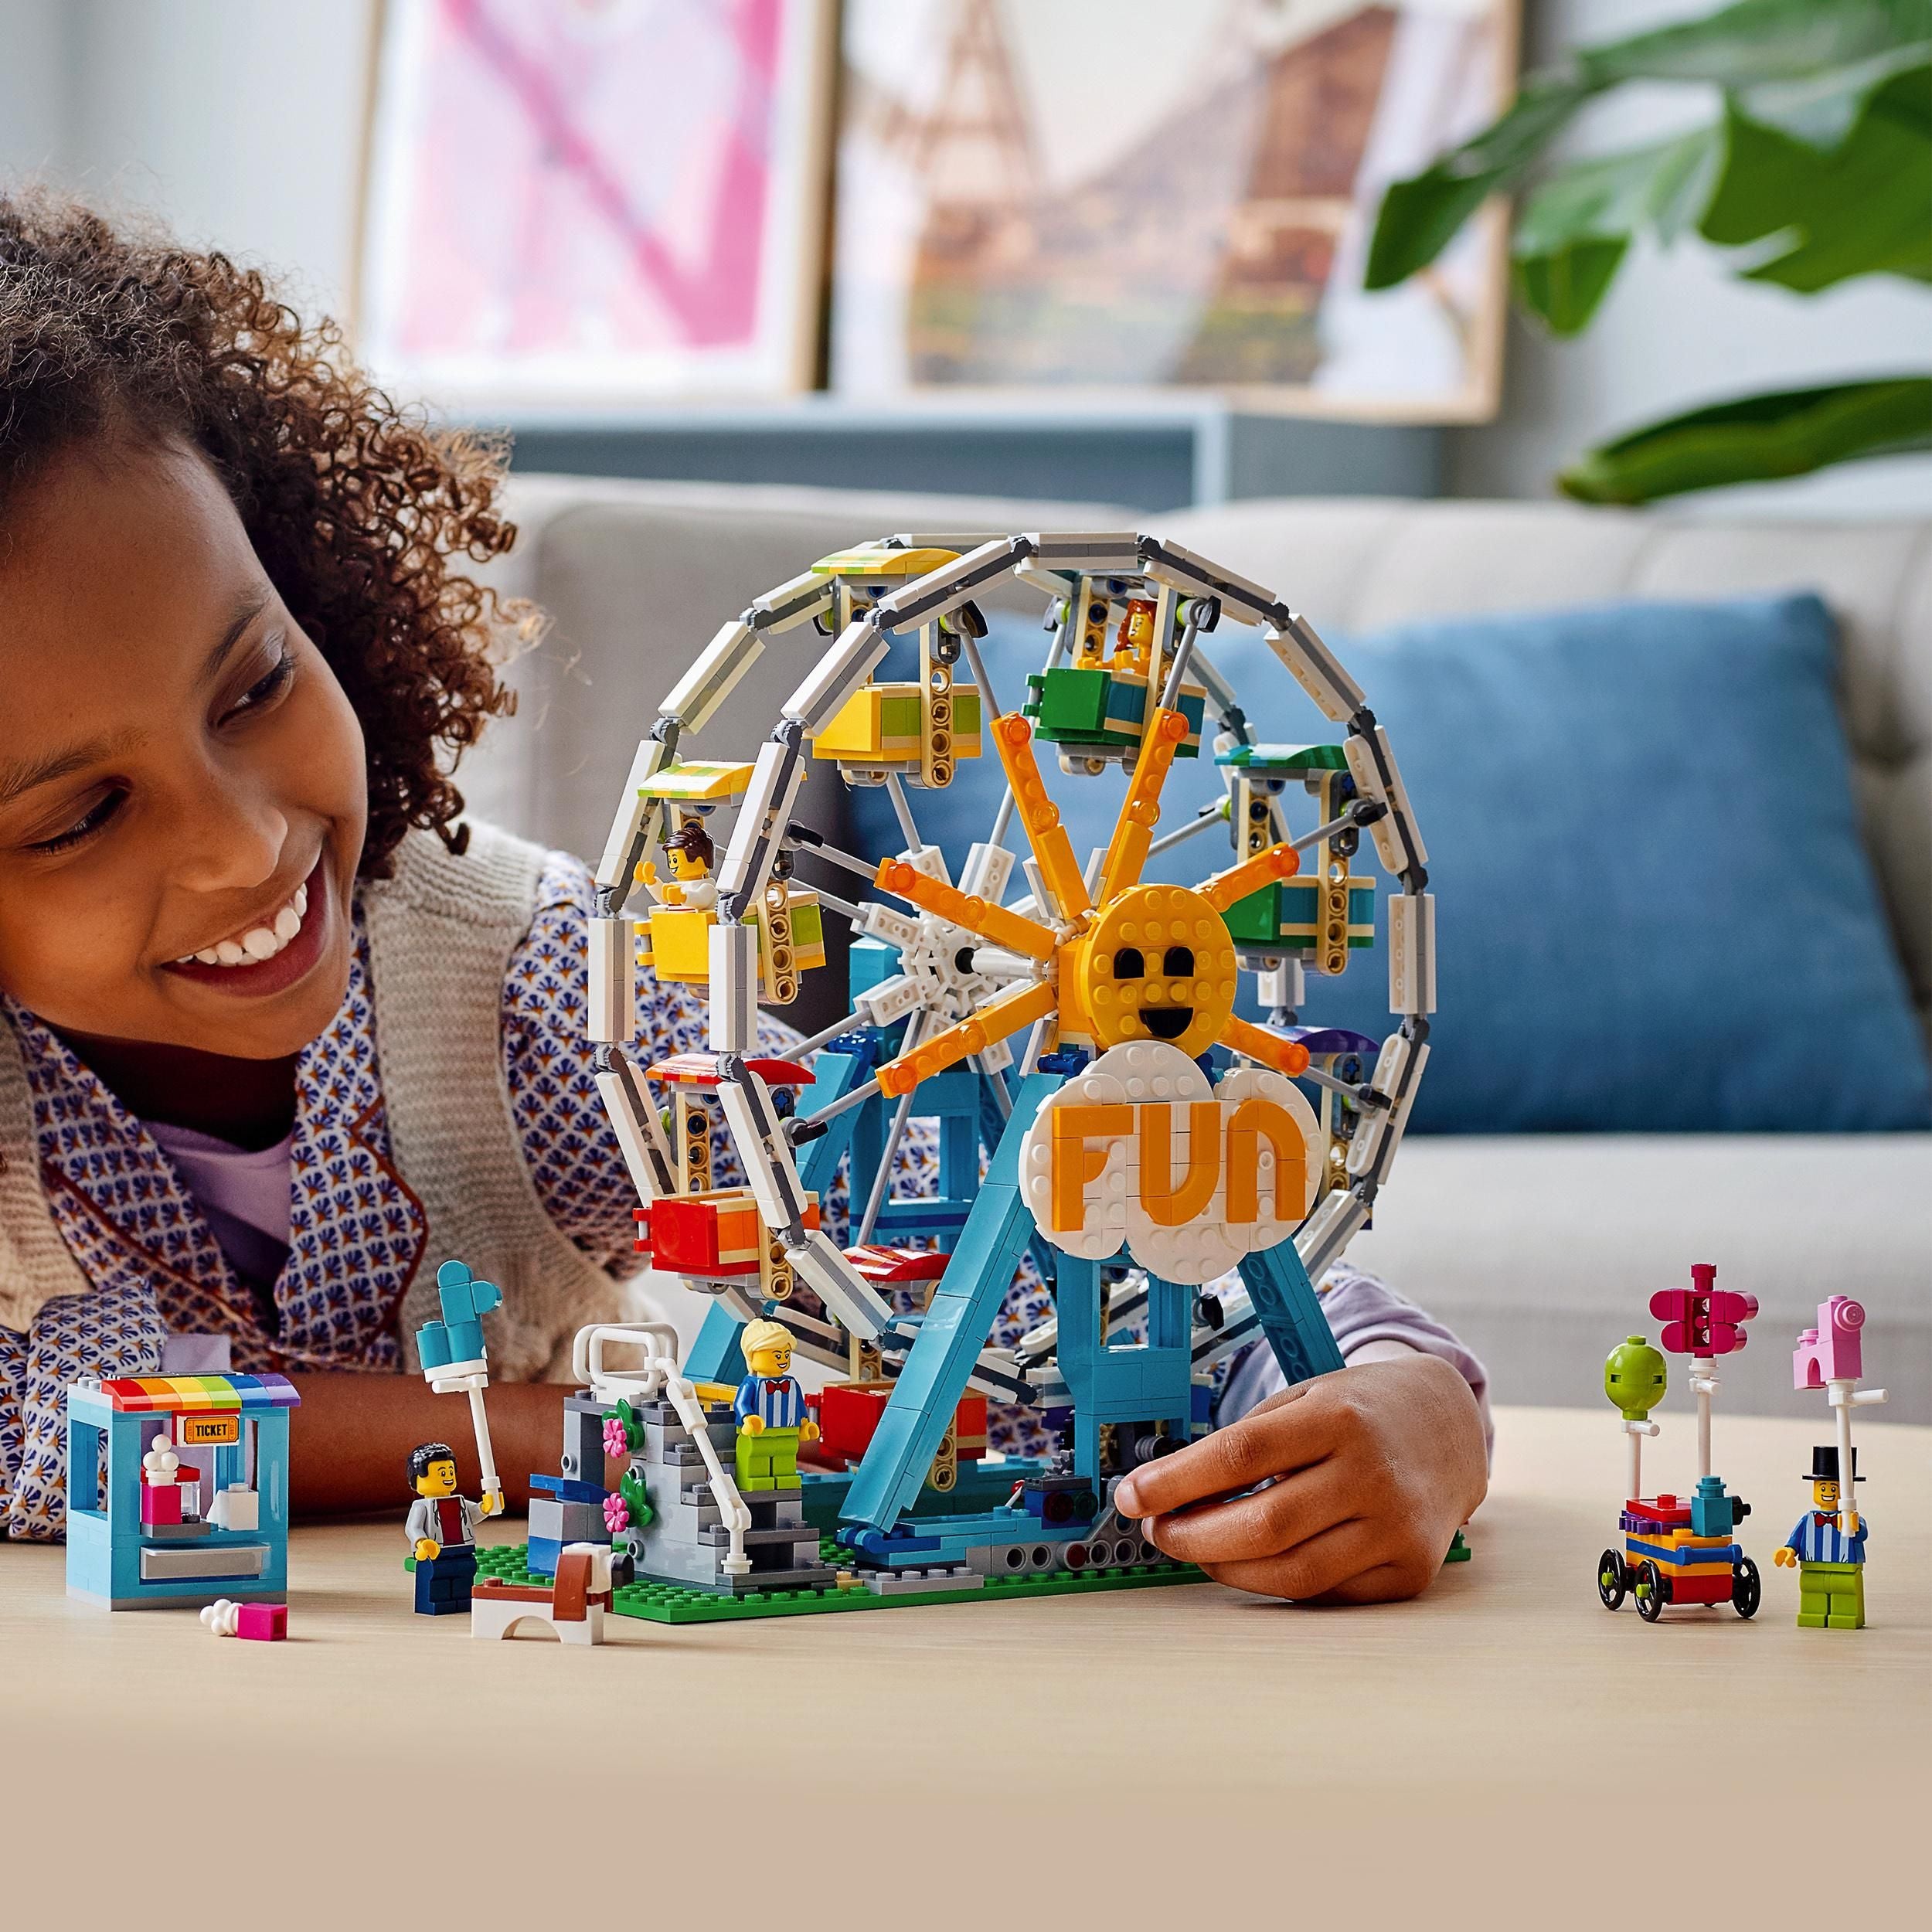 LEGO® Creator 3in1 Ferris Wheel Building Set 31119 Default Title